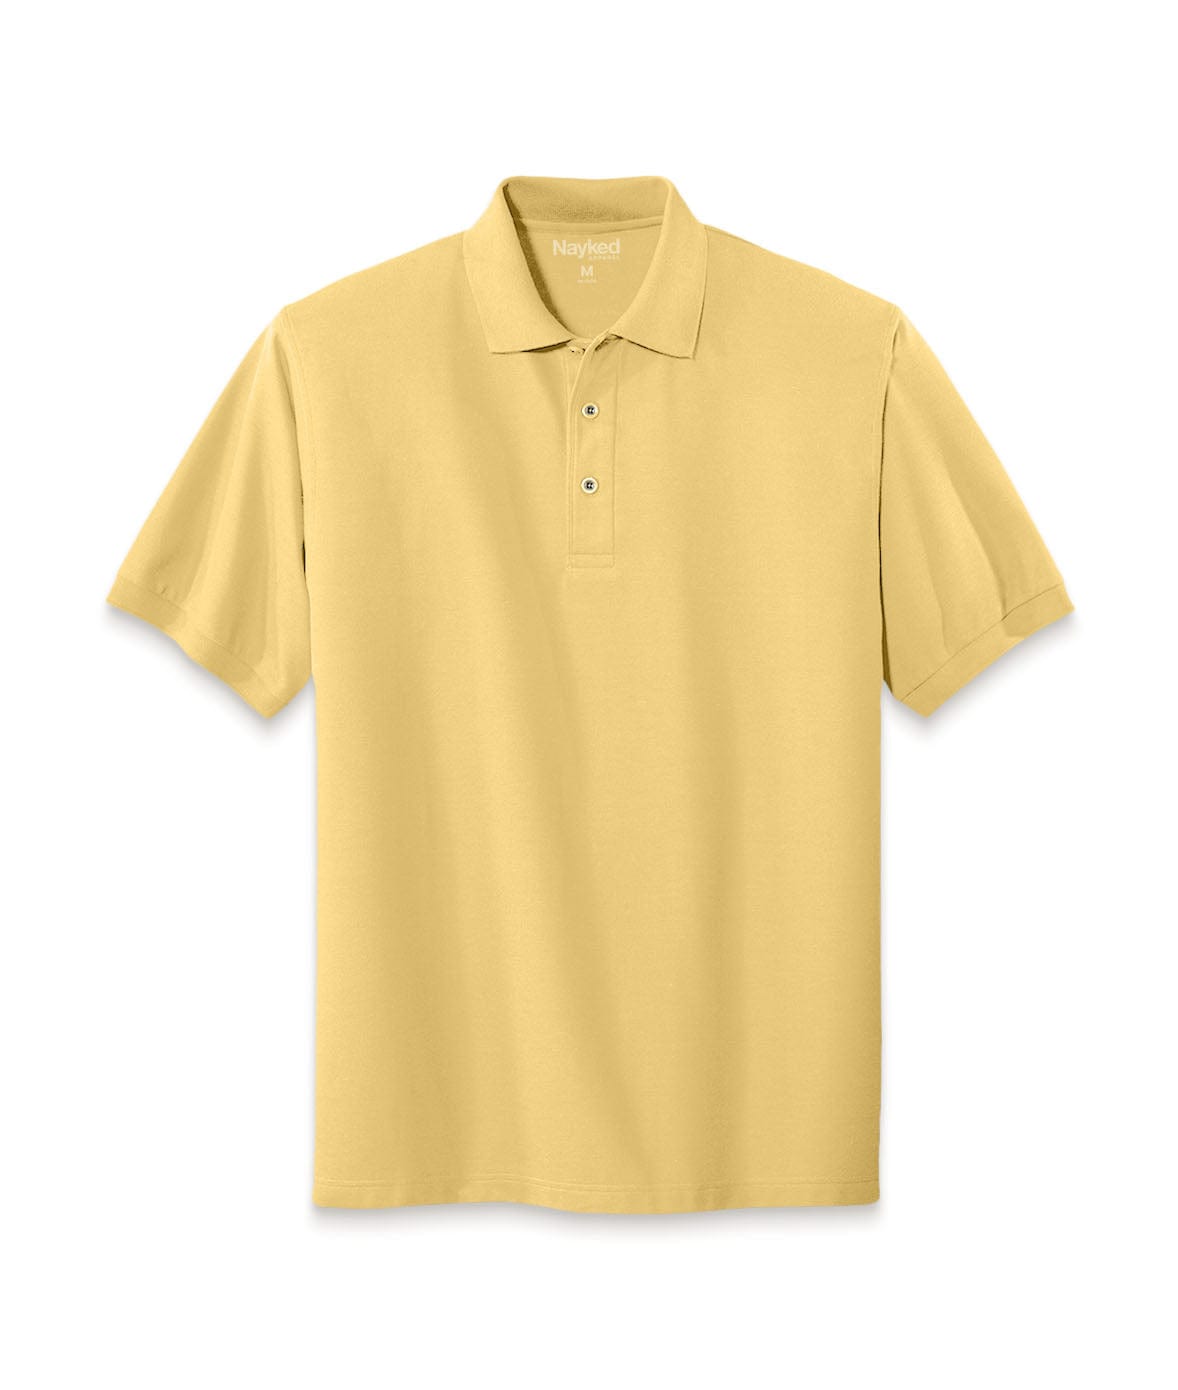 Men's Soft Big Pique Polo Shirt Worn by Model